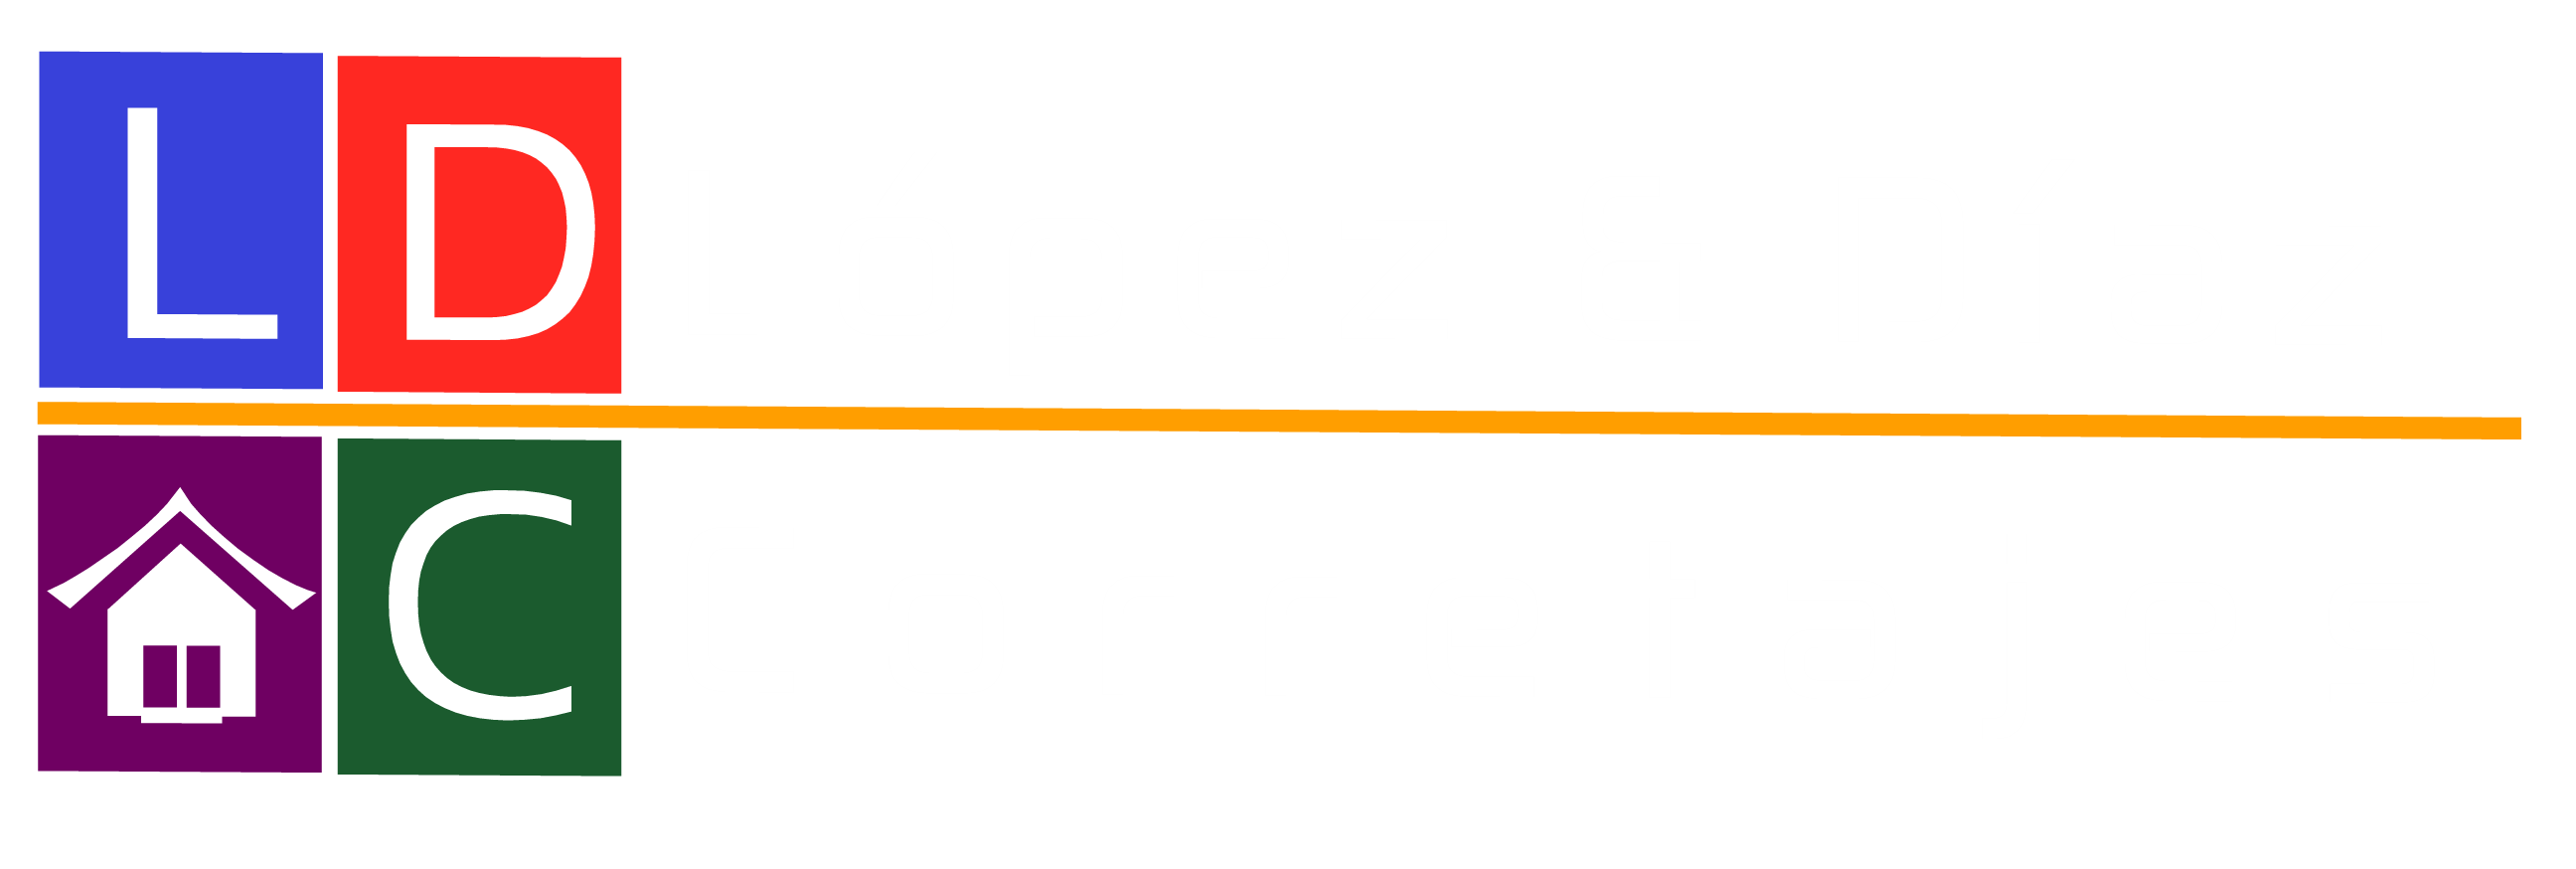 Lopez & Diaz Corretajes